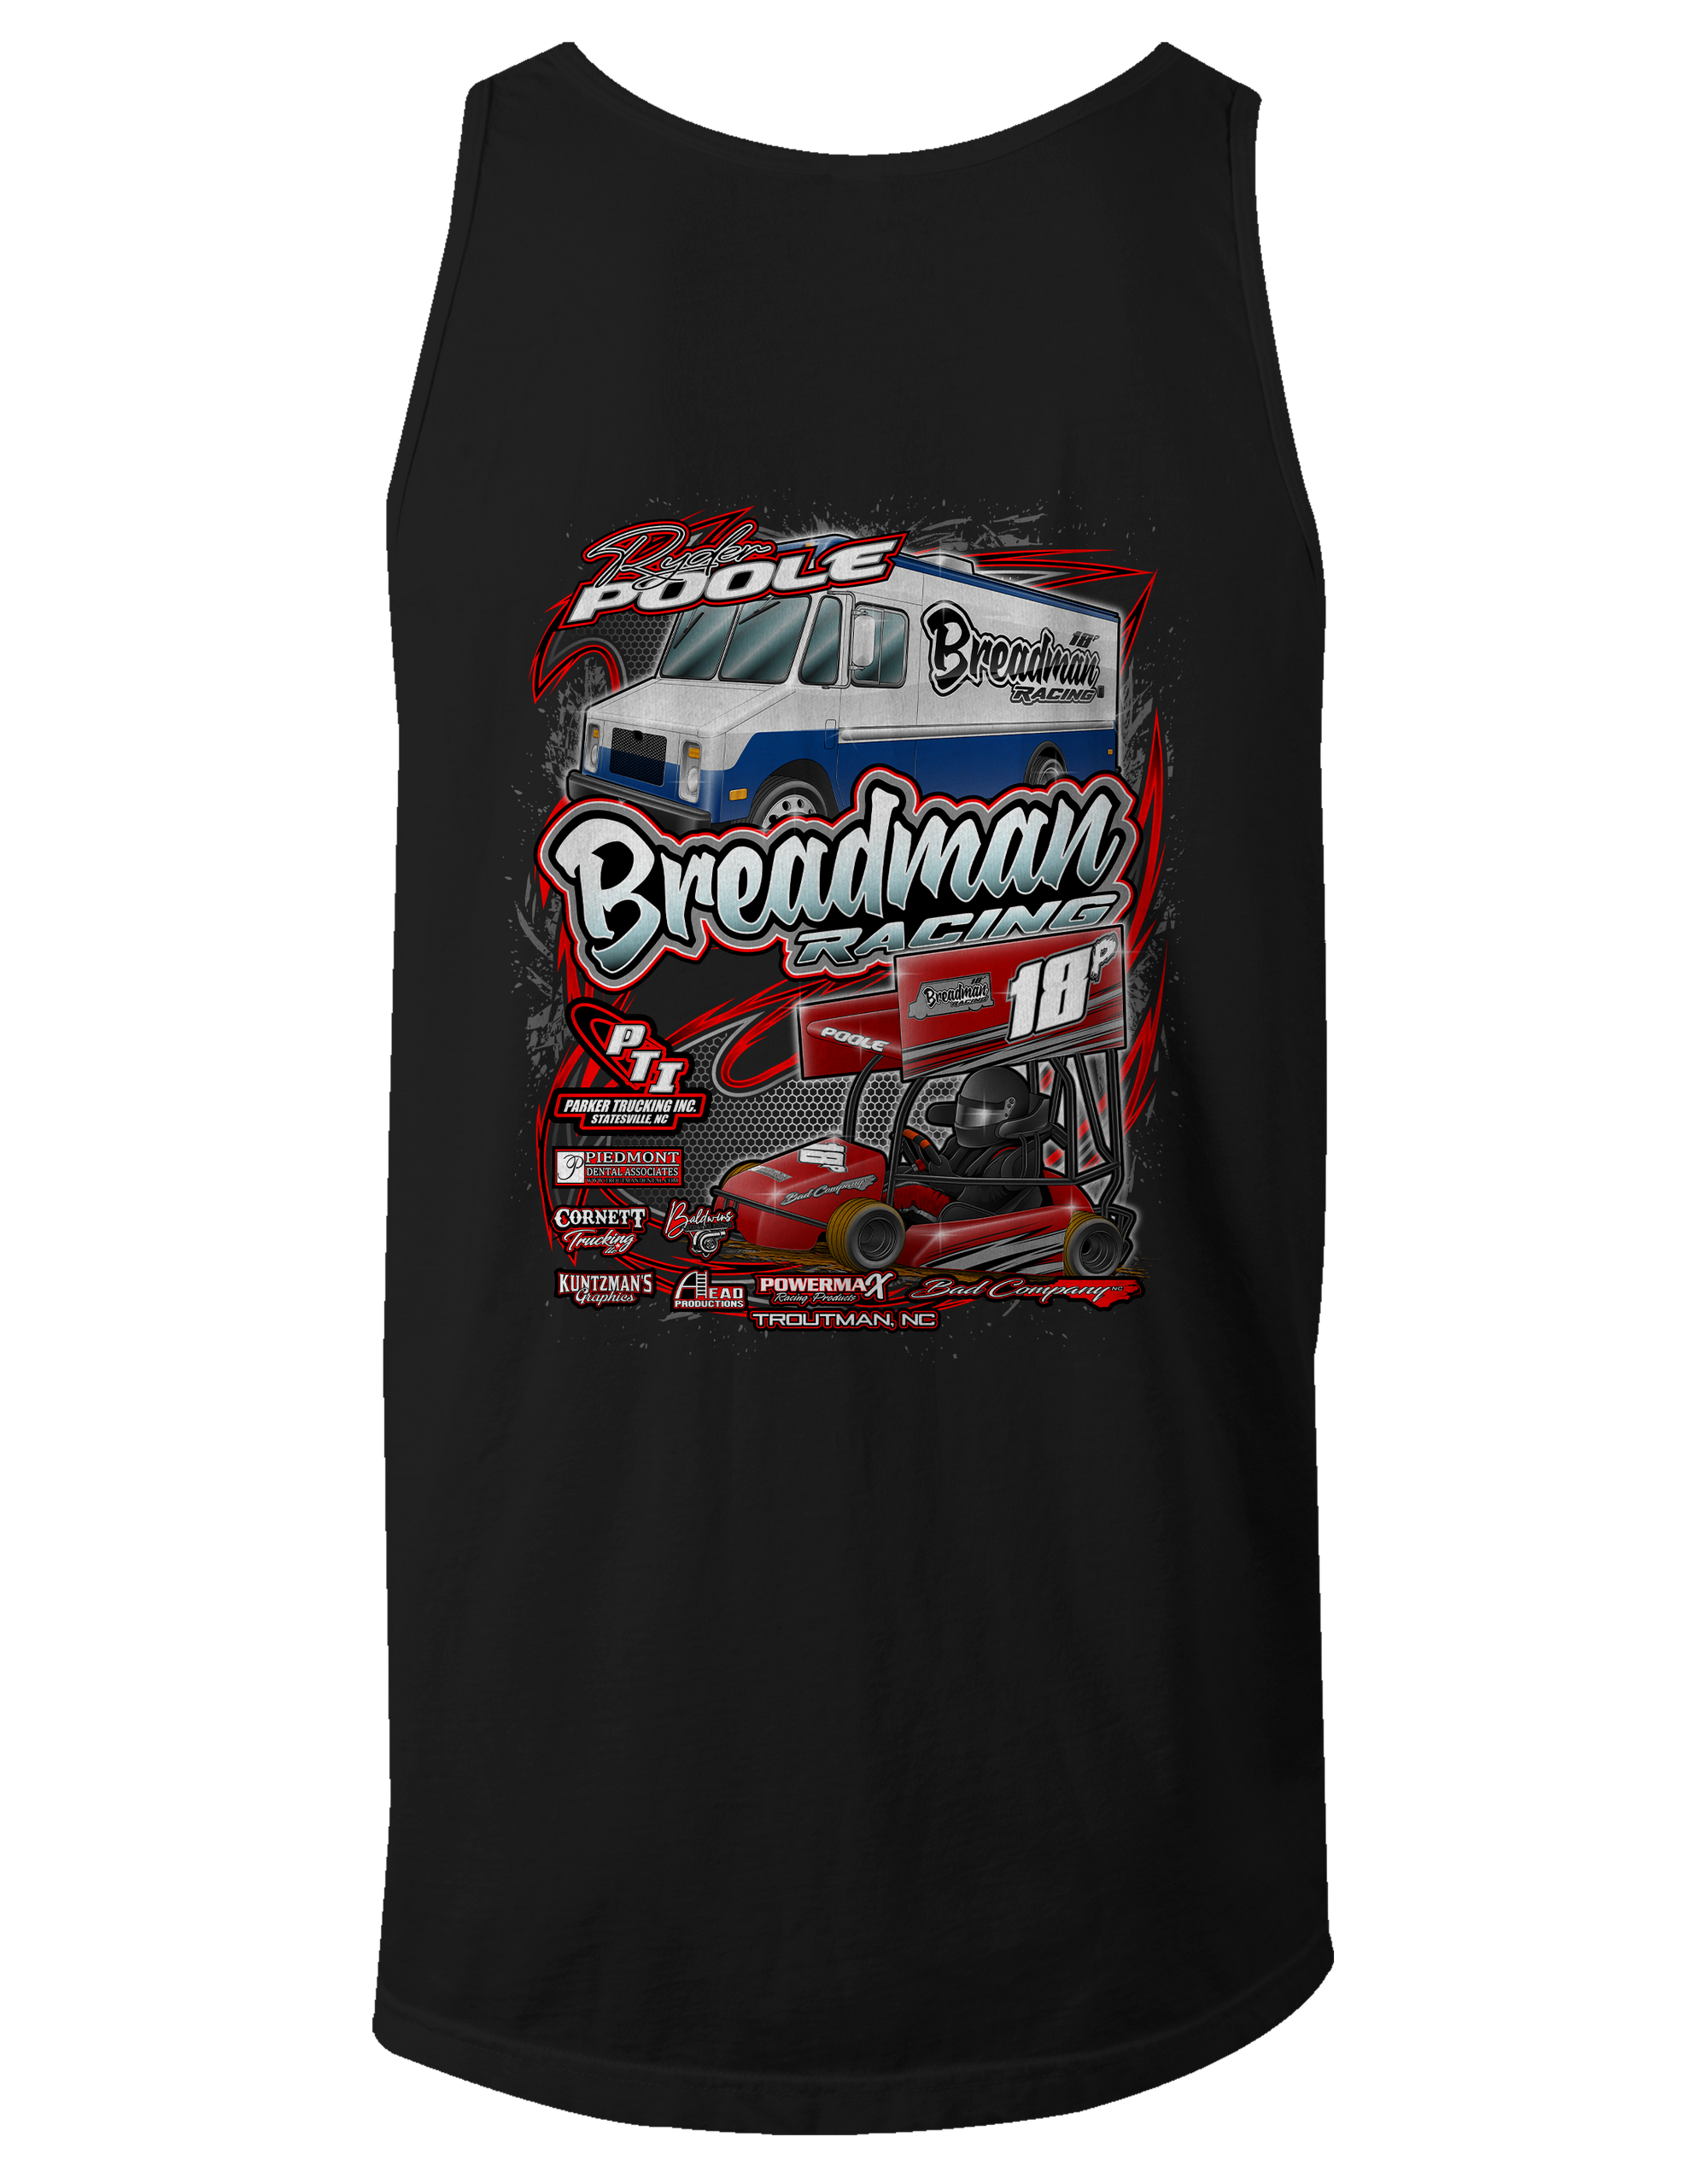 Breadman Racing Tank Tops Black Acid Apparel